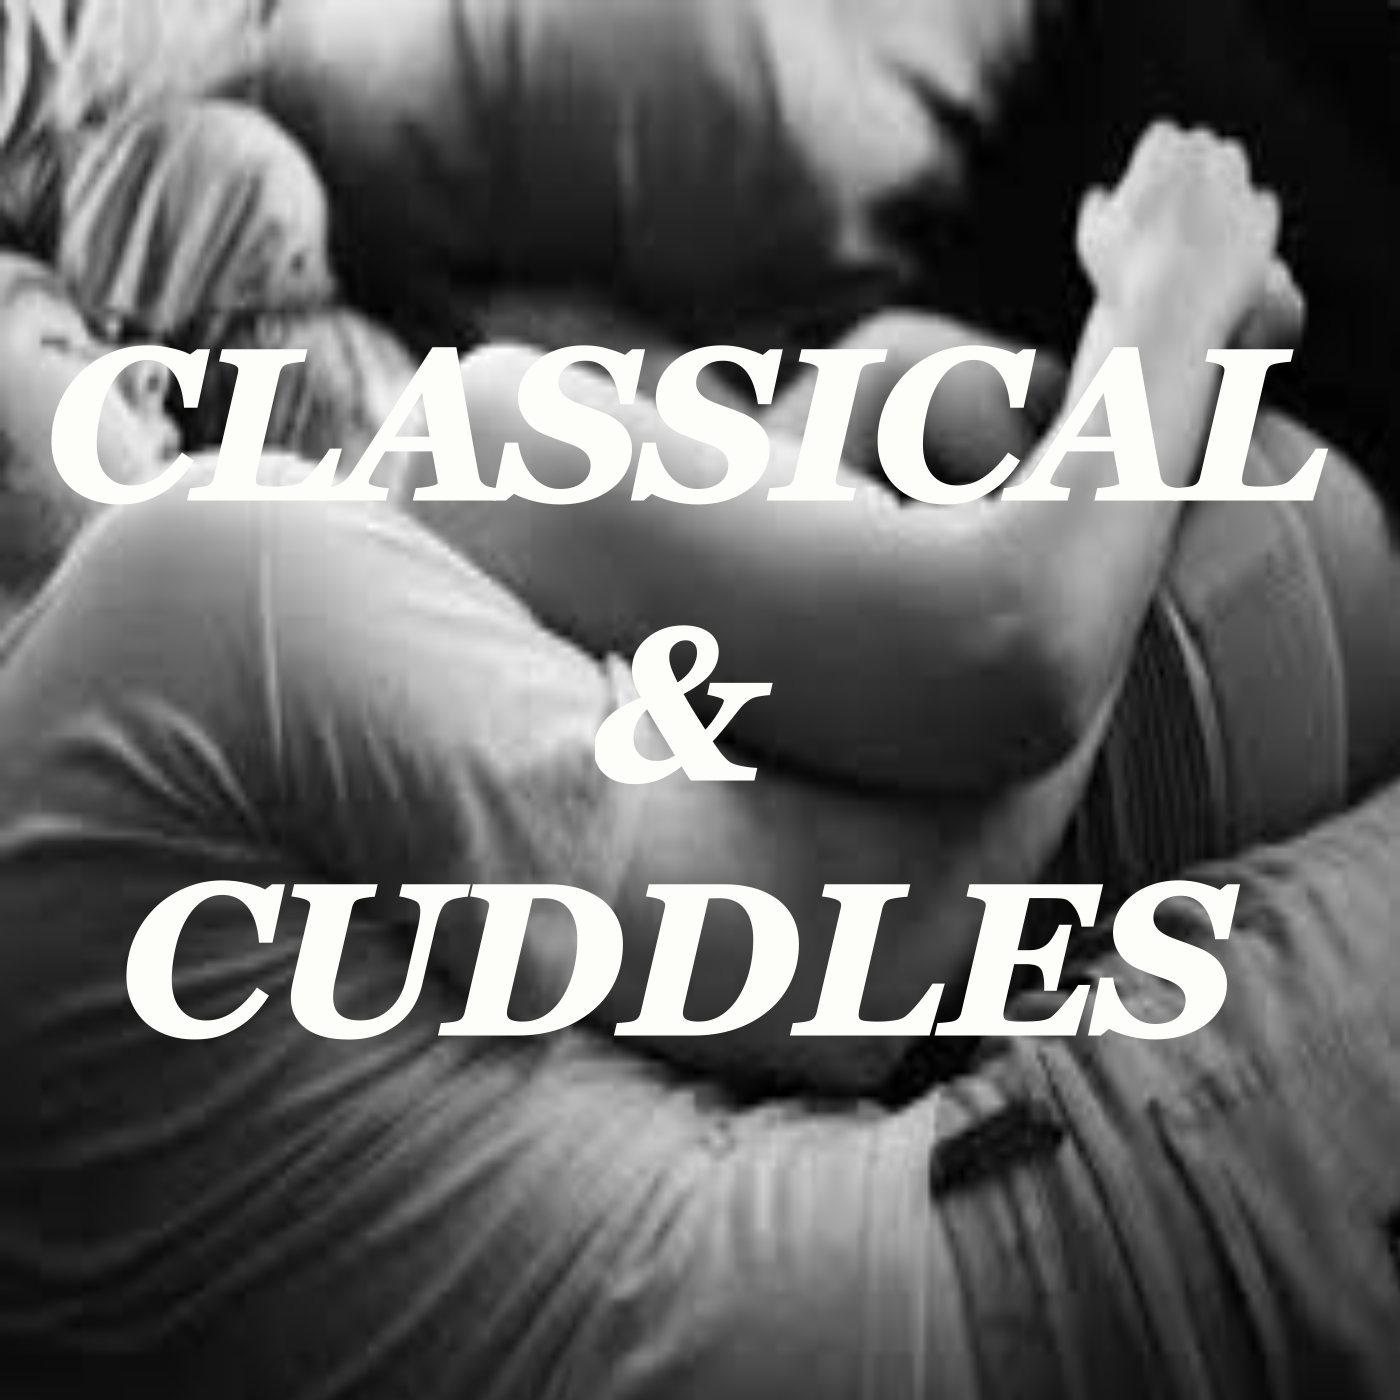 Classical & Cuddles